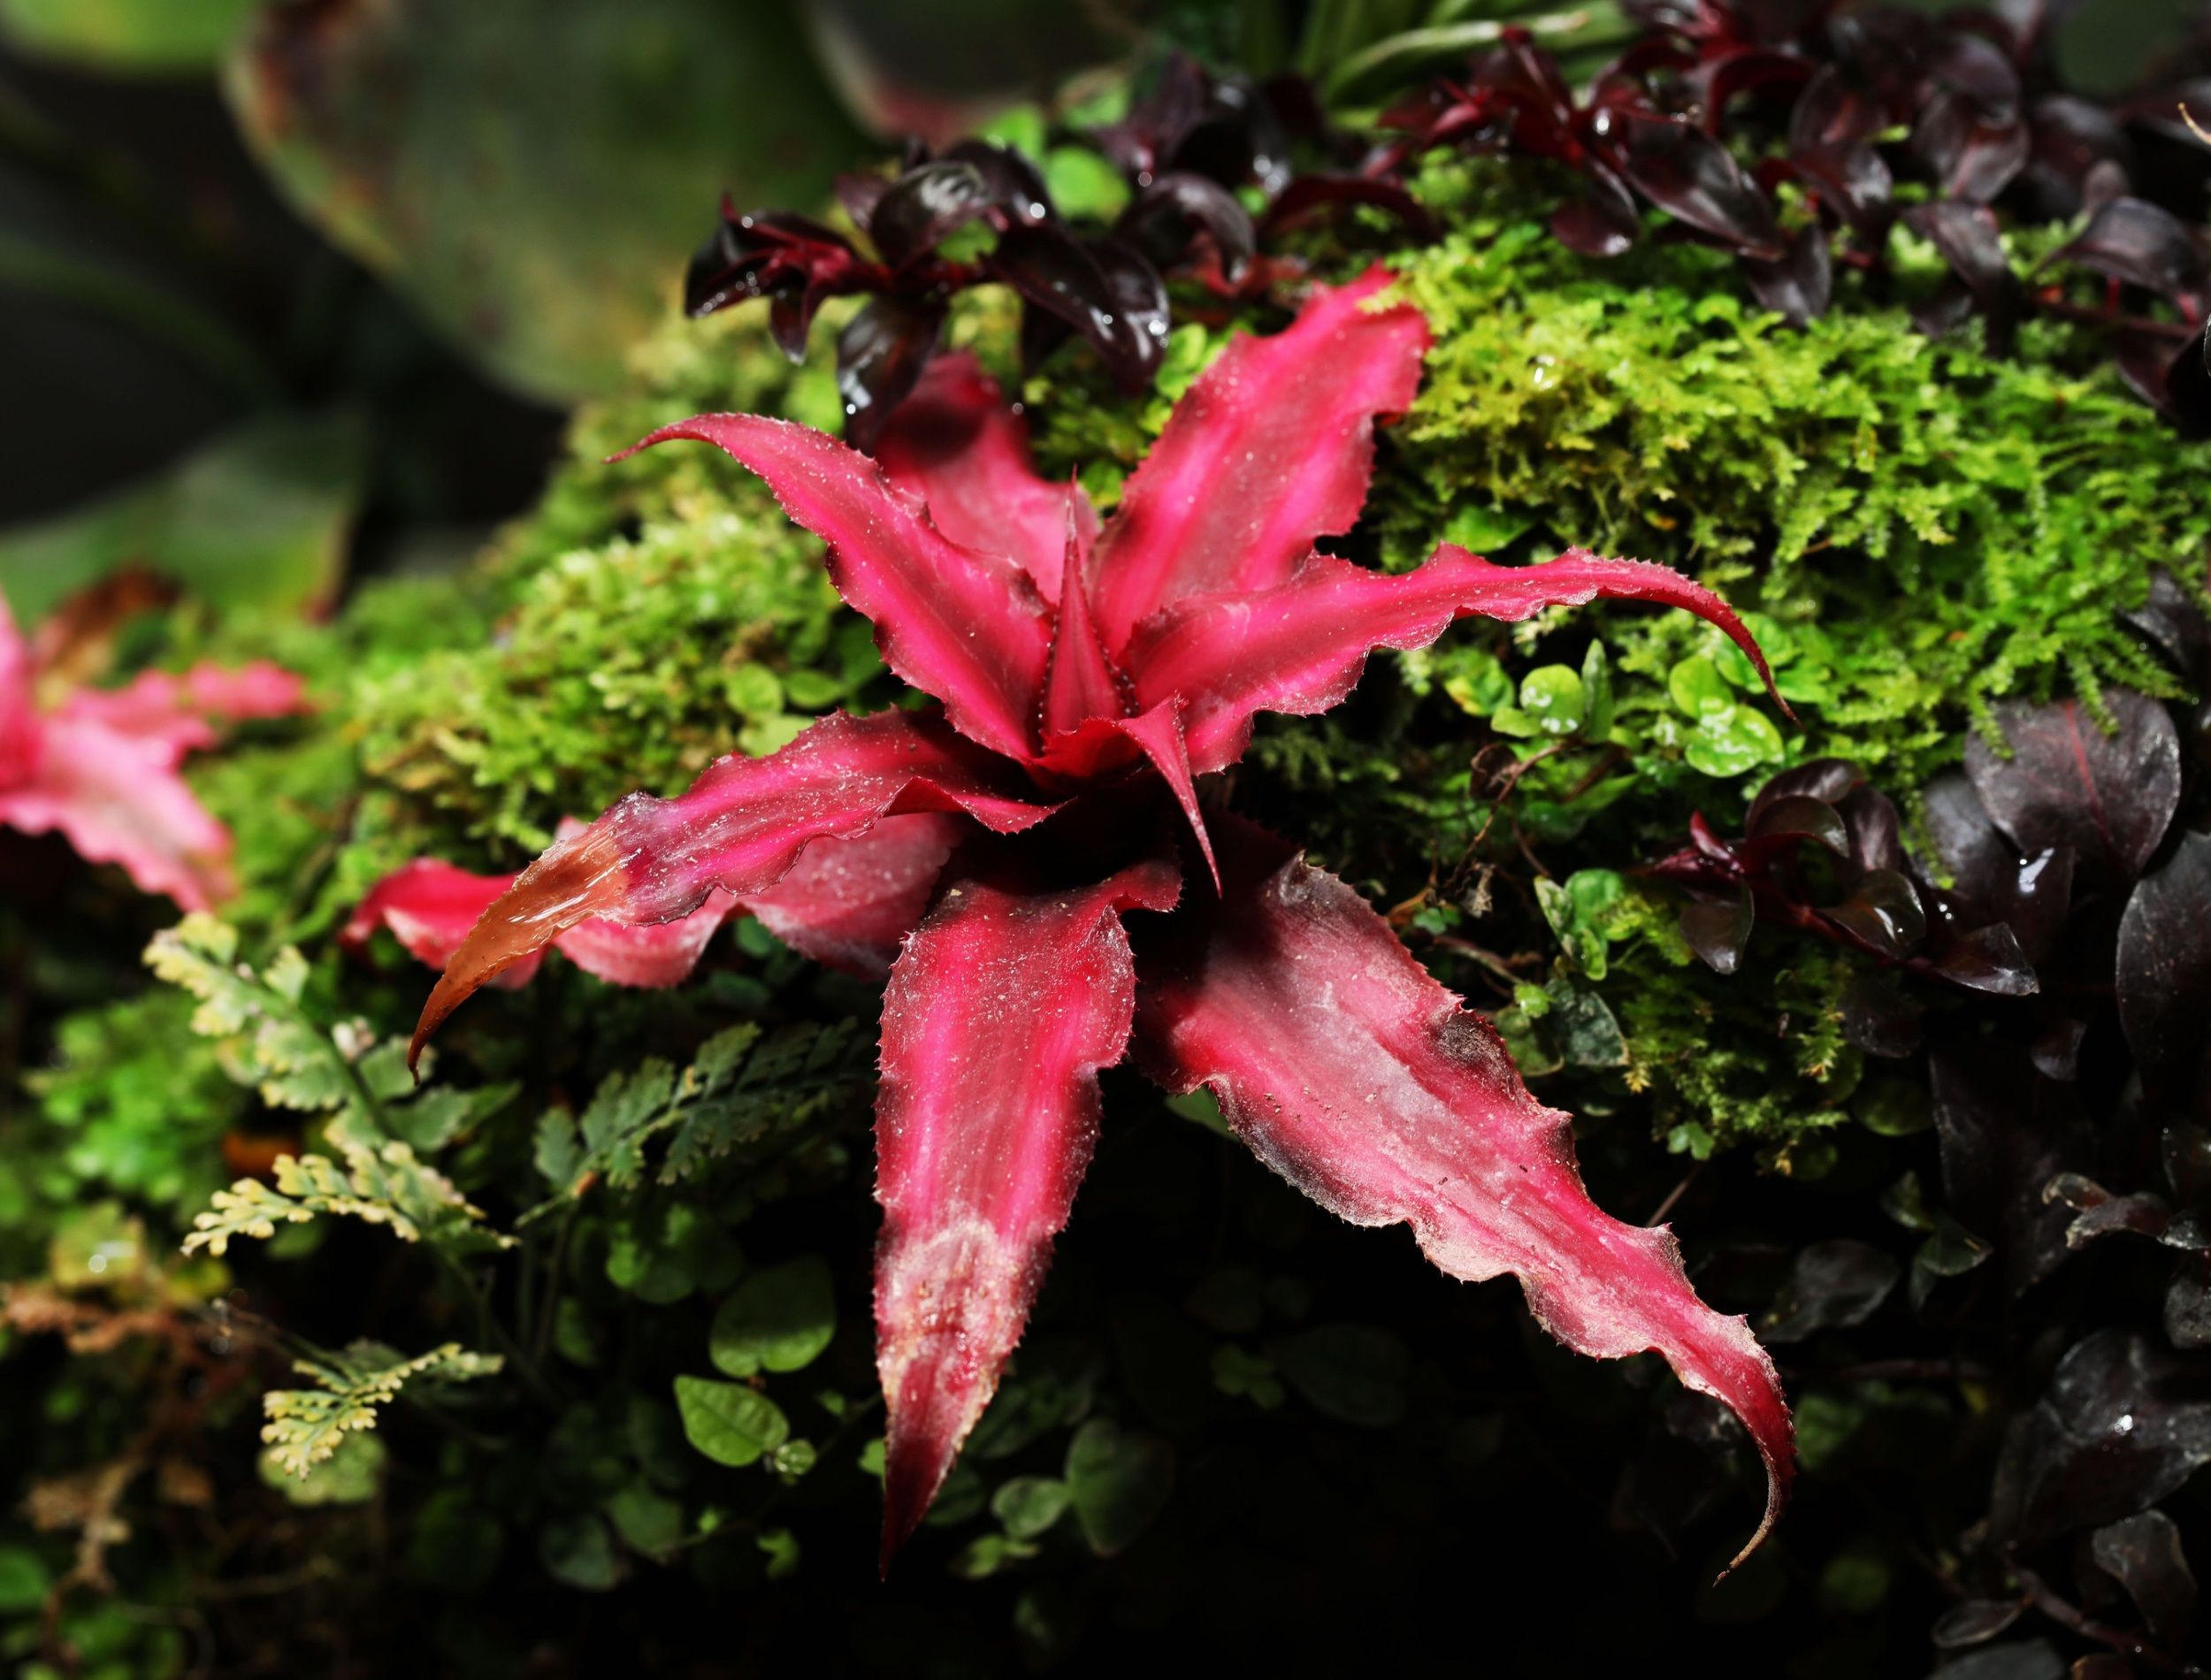 Red Earth star Cryptanthus bromeliad growing in terrarium tank